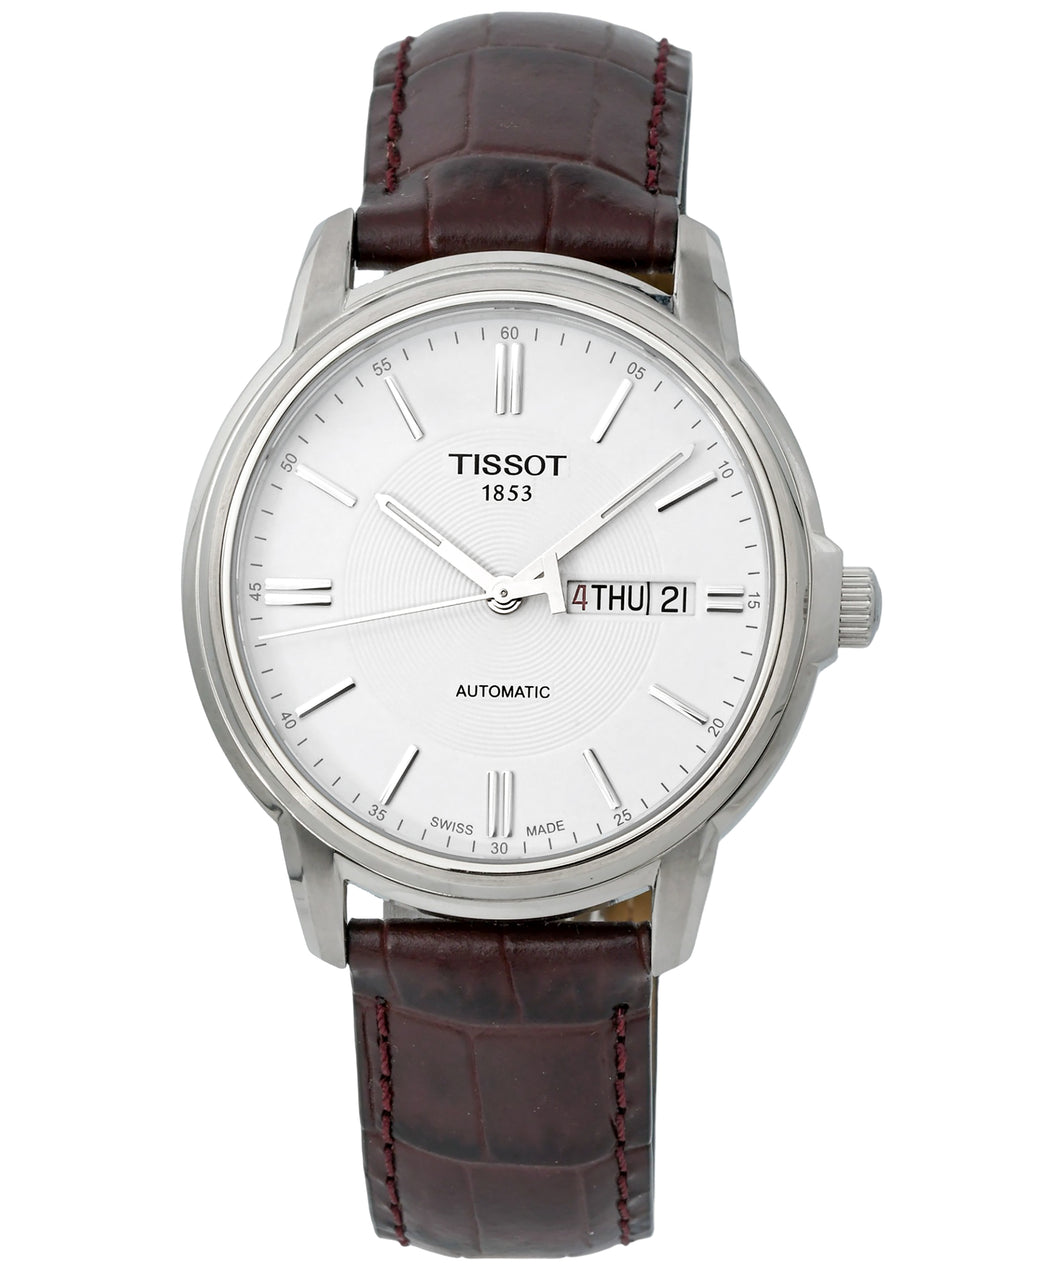 NEW Tissot Automatics III Men's Silver Dial Strap Watch T0654301603100 MSRP $550